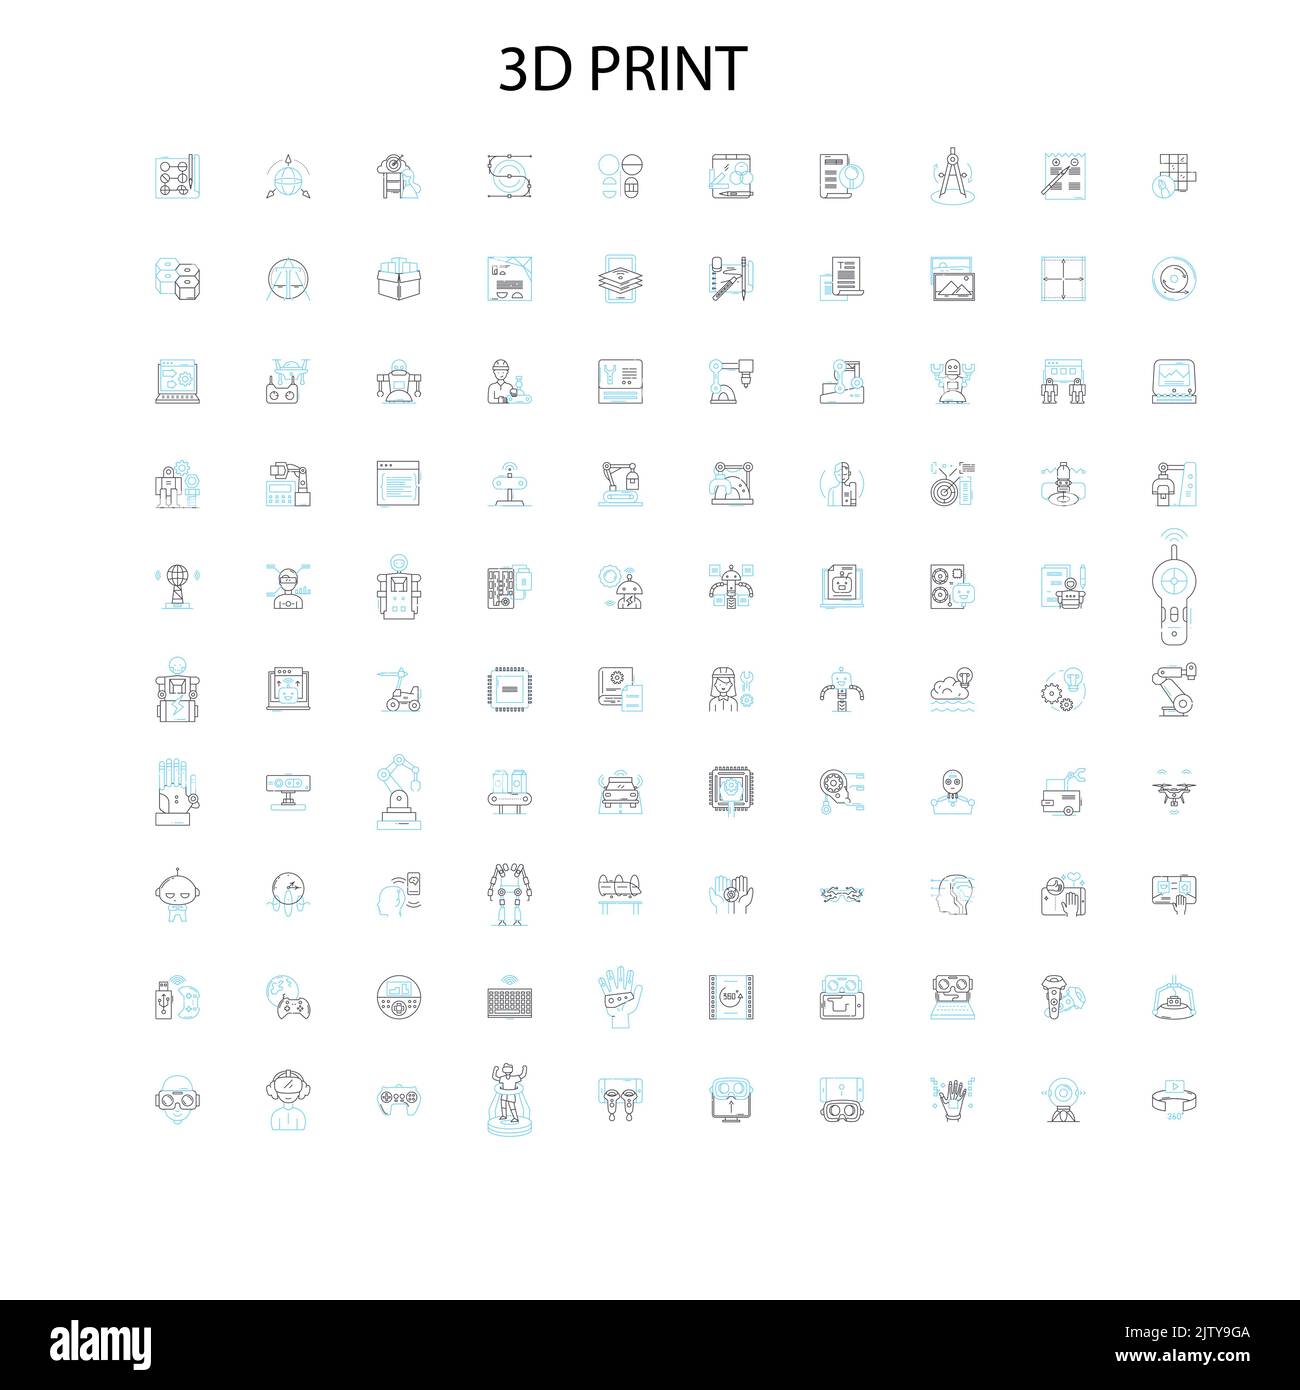 3D Print-Symbole, Schilder, Umrisssymbole, Konzept lineare Illustration Linie Sammlung Stock Vektor